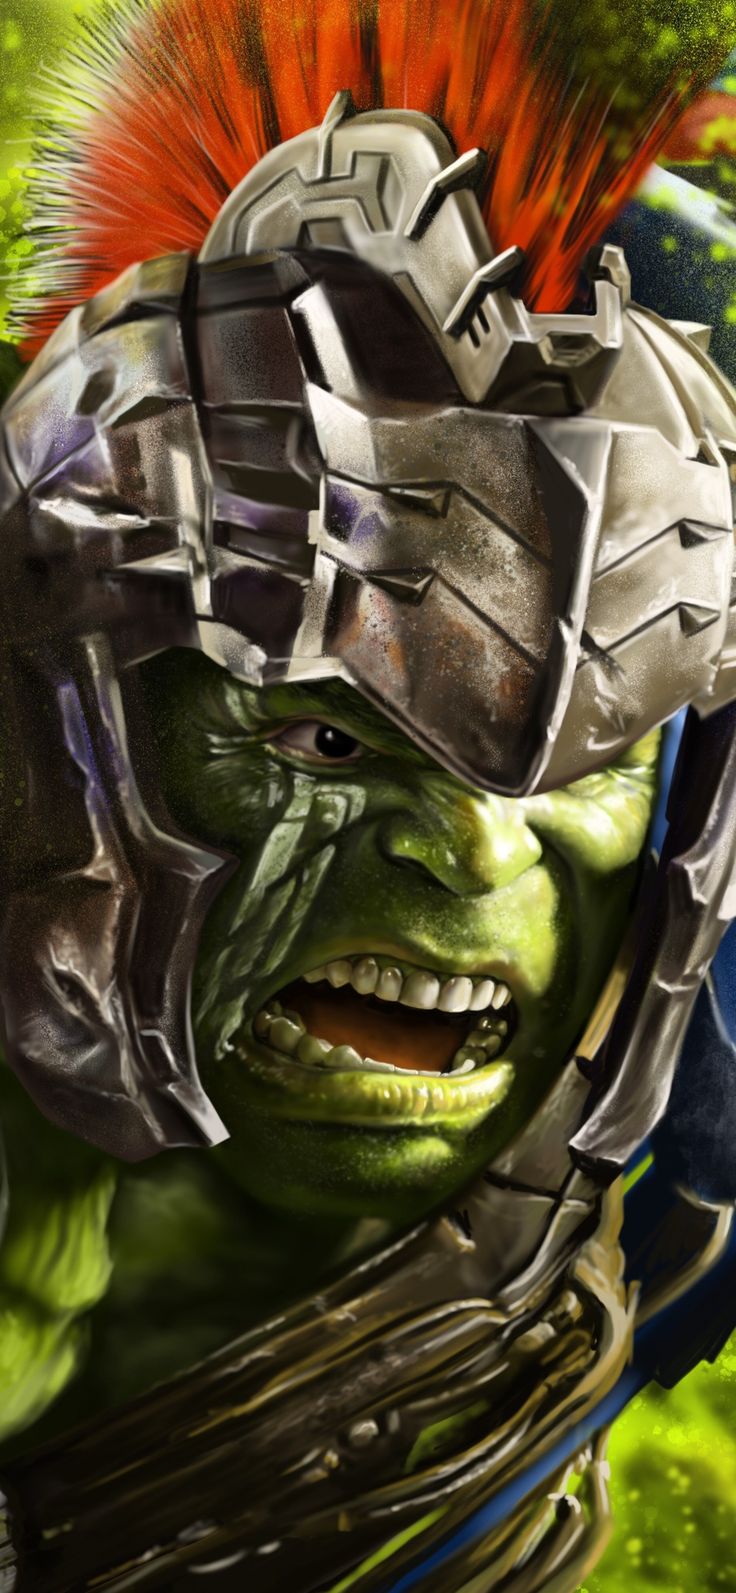 Hulk In Thor Ragnarok Wallpapers